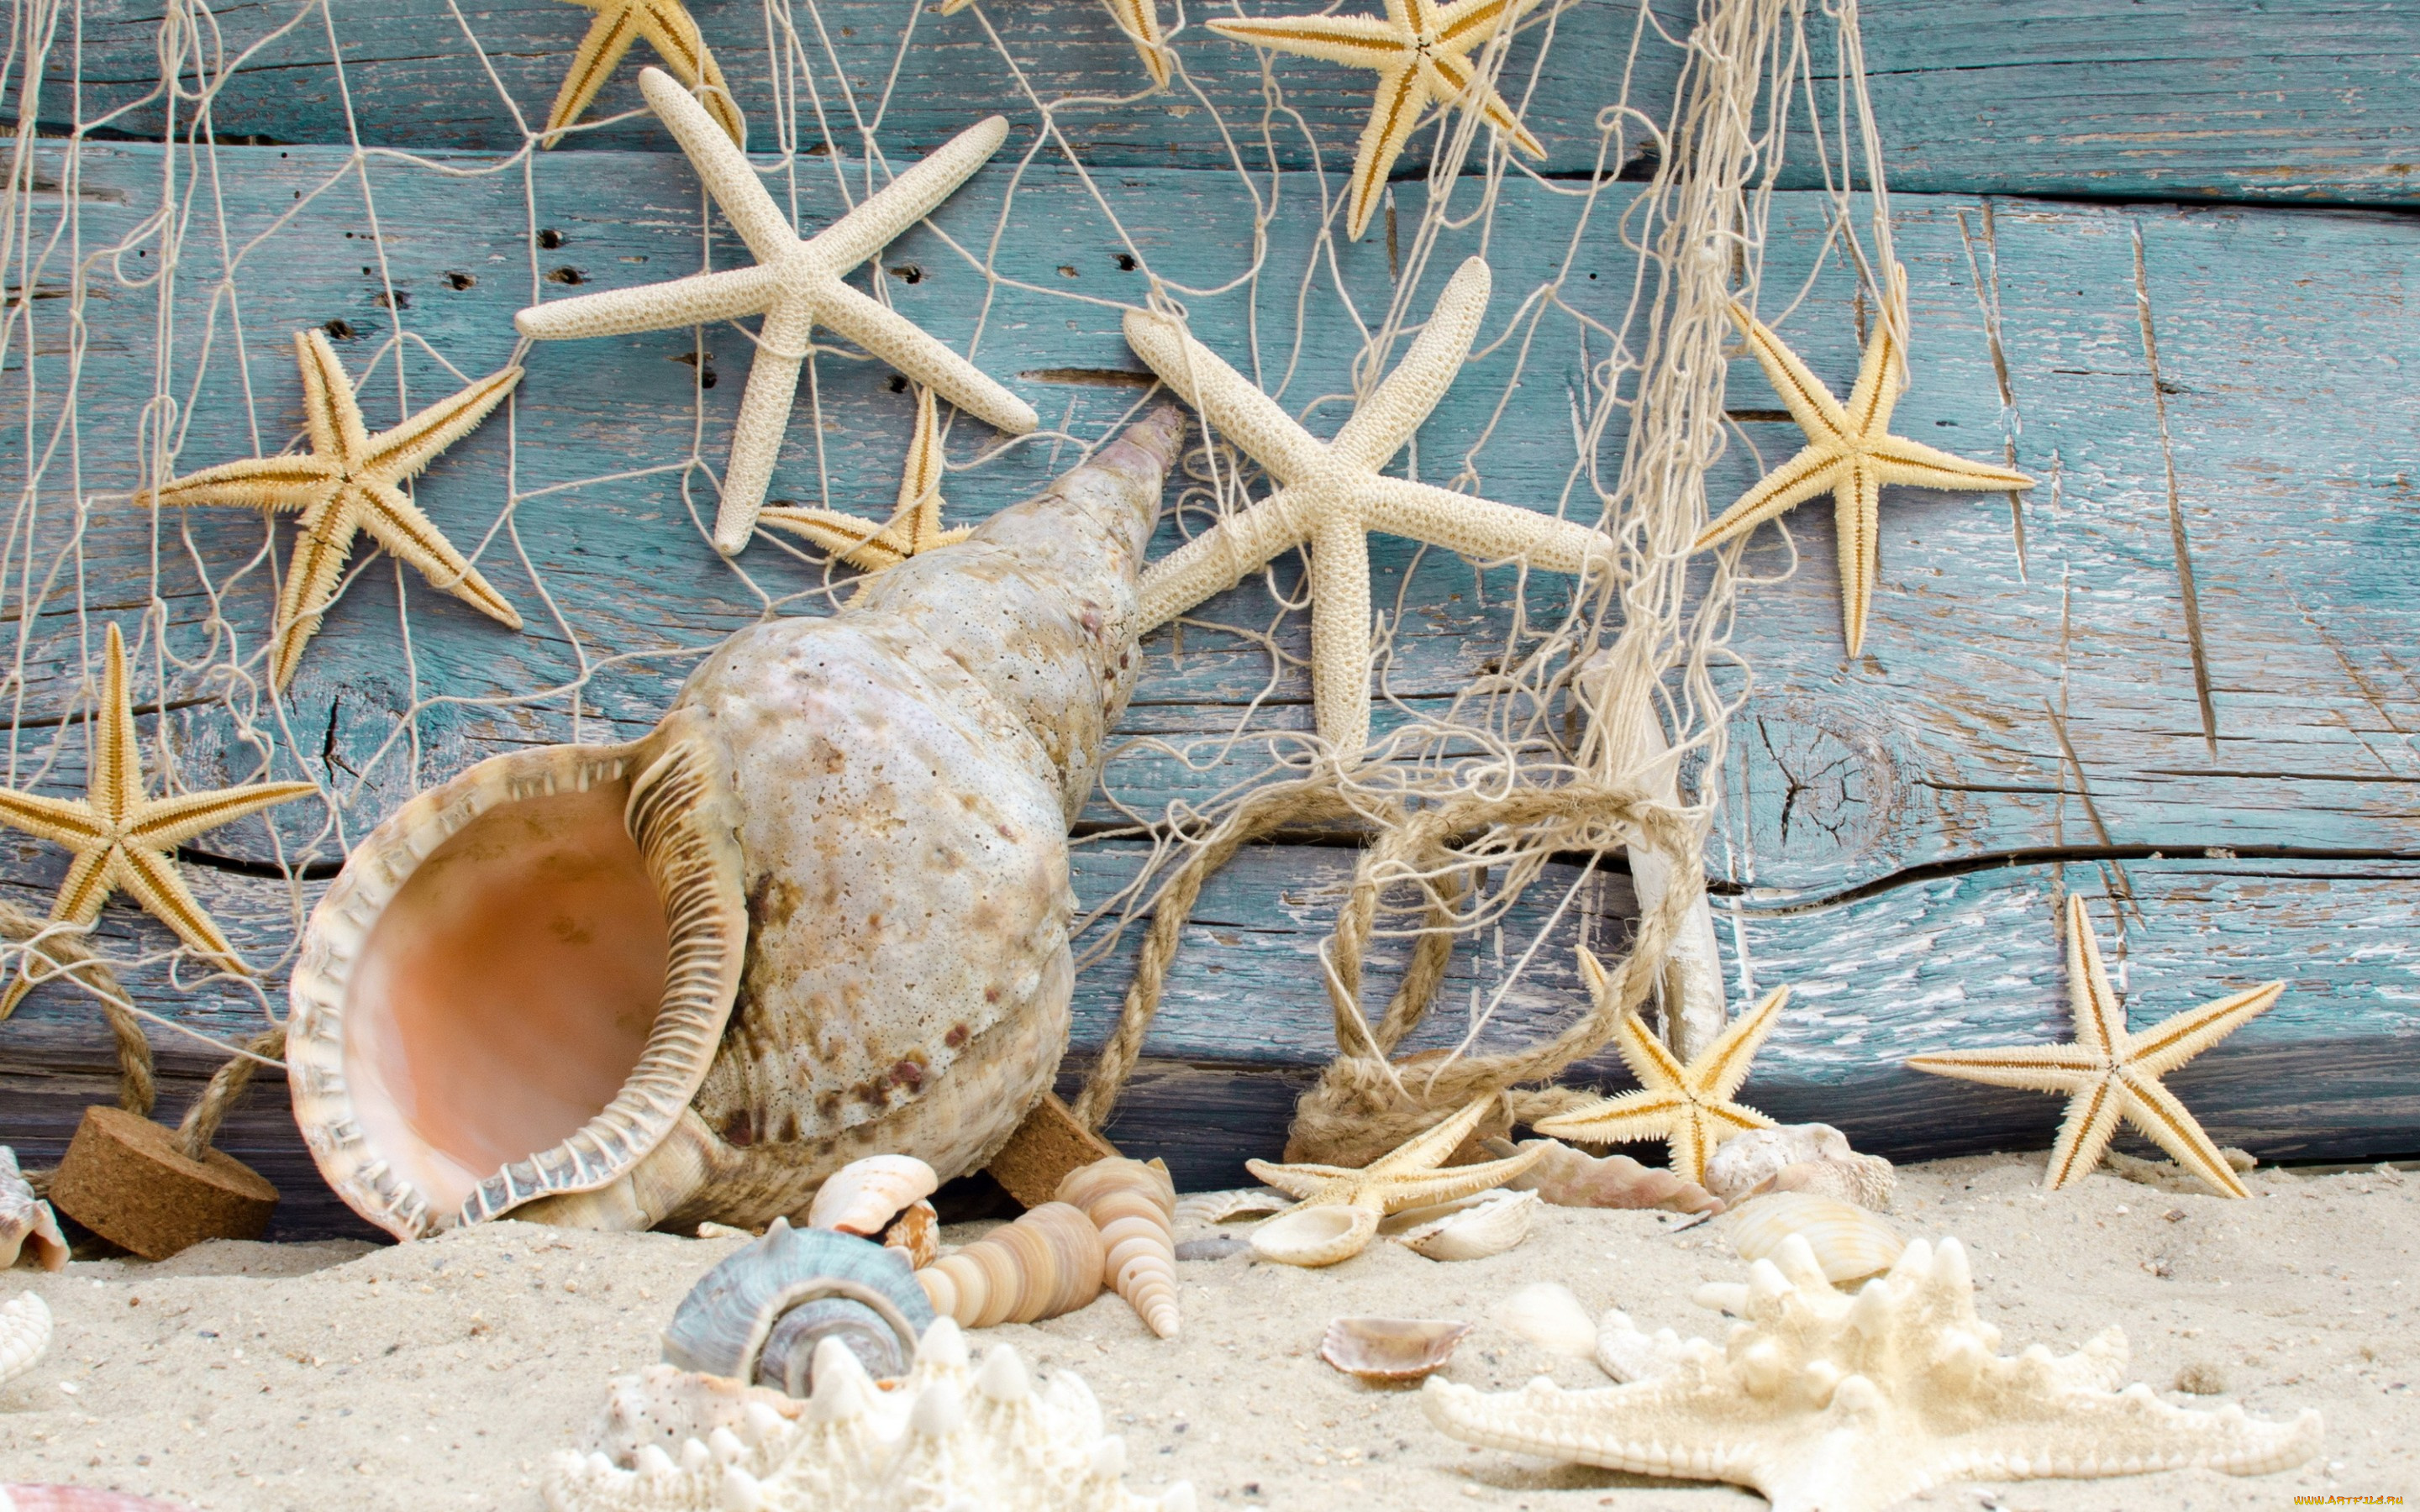 разное, ракушки, , кораллы, , декоративные, и, spa-камни, пляж, wood, marine, sand, beach, starfishes, seashells, звезды, песок